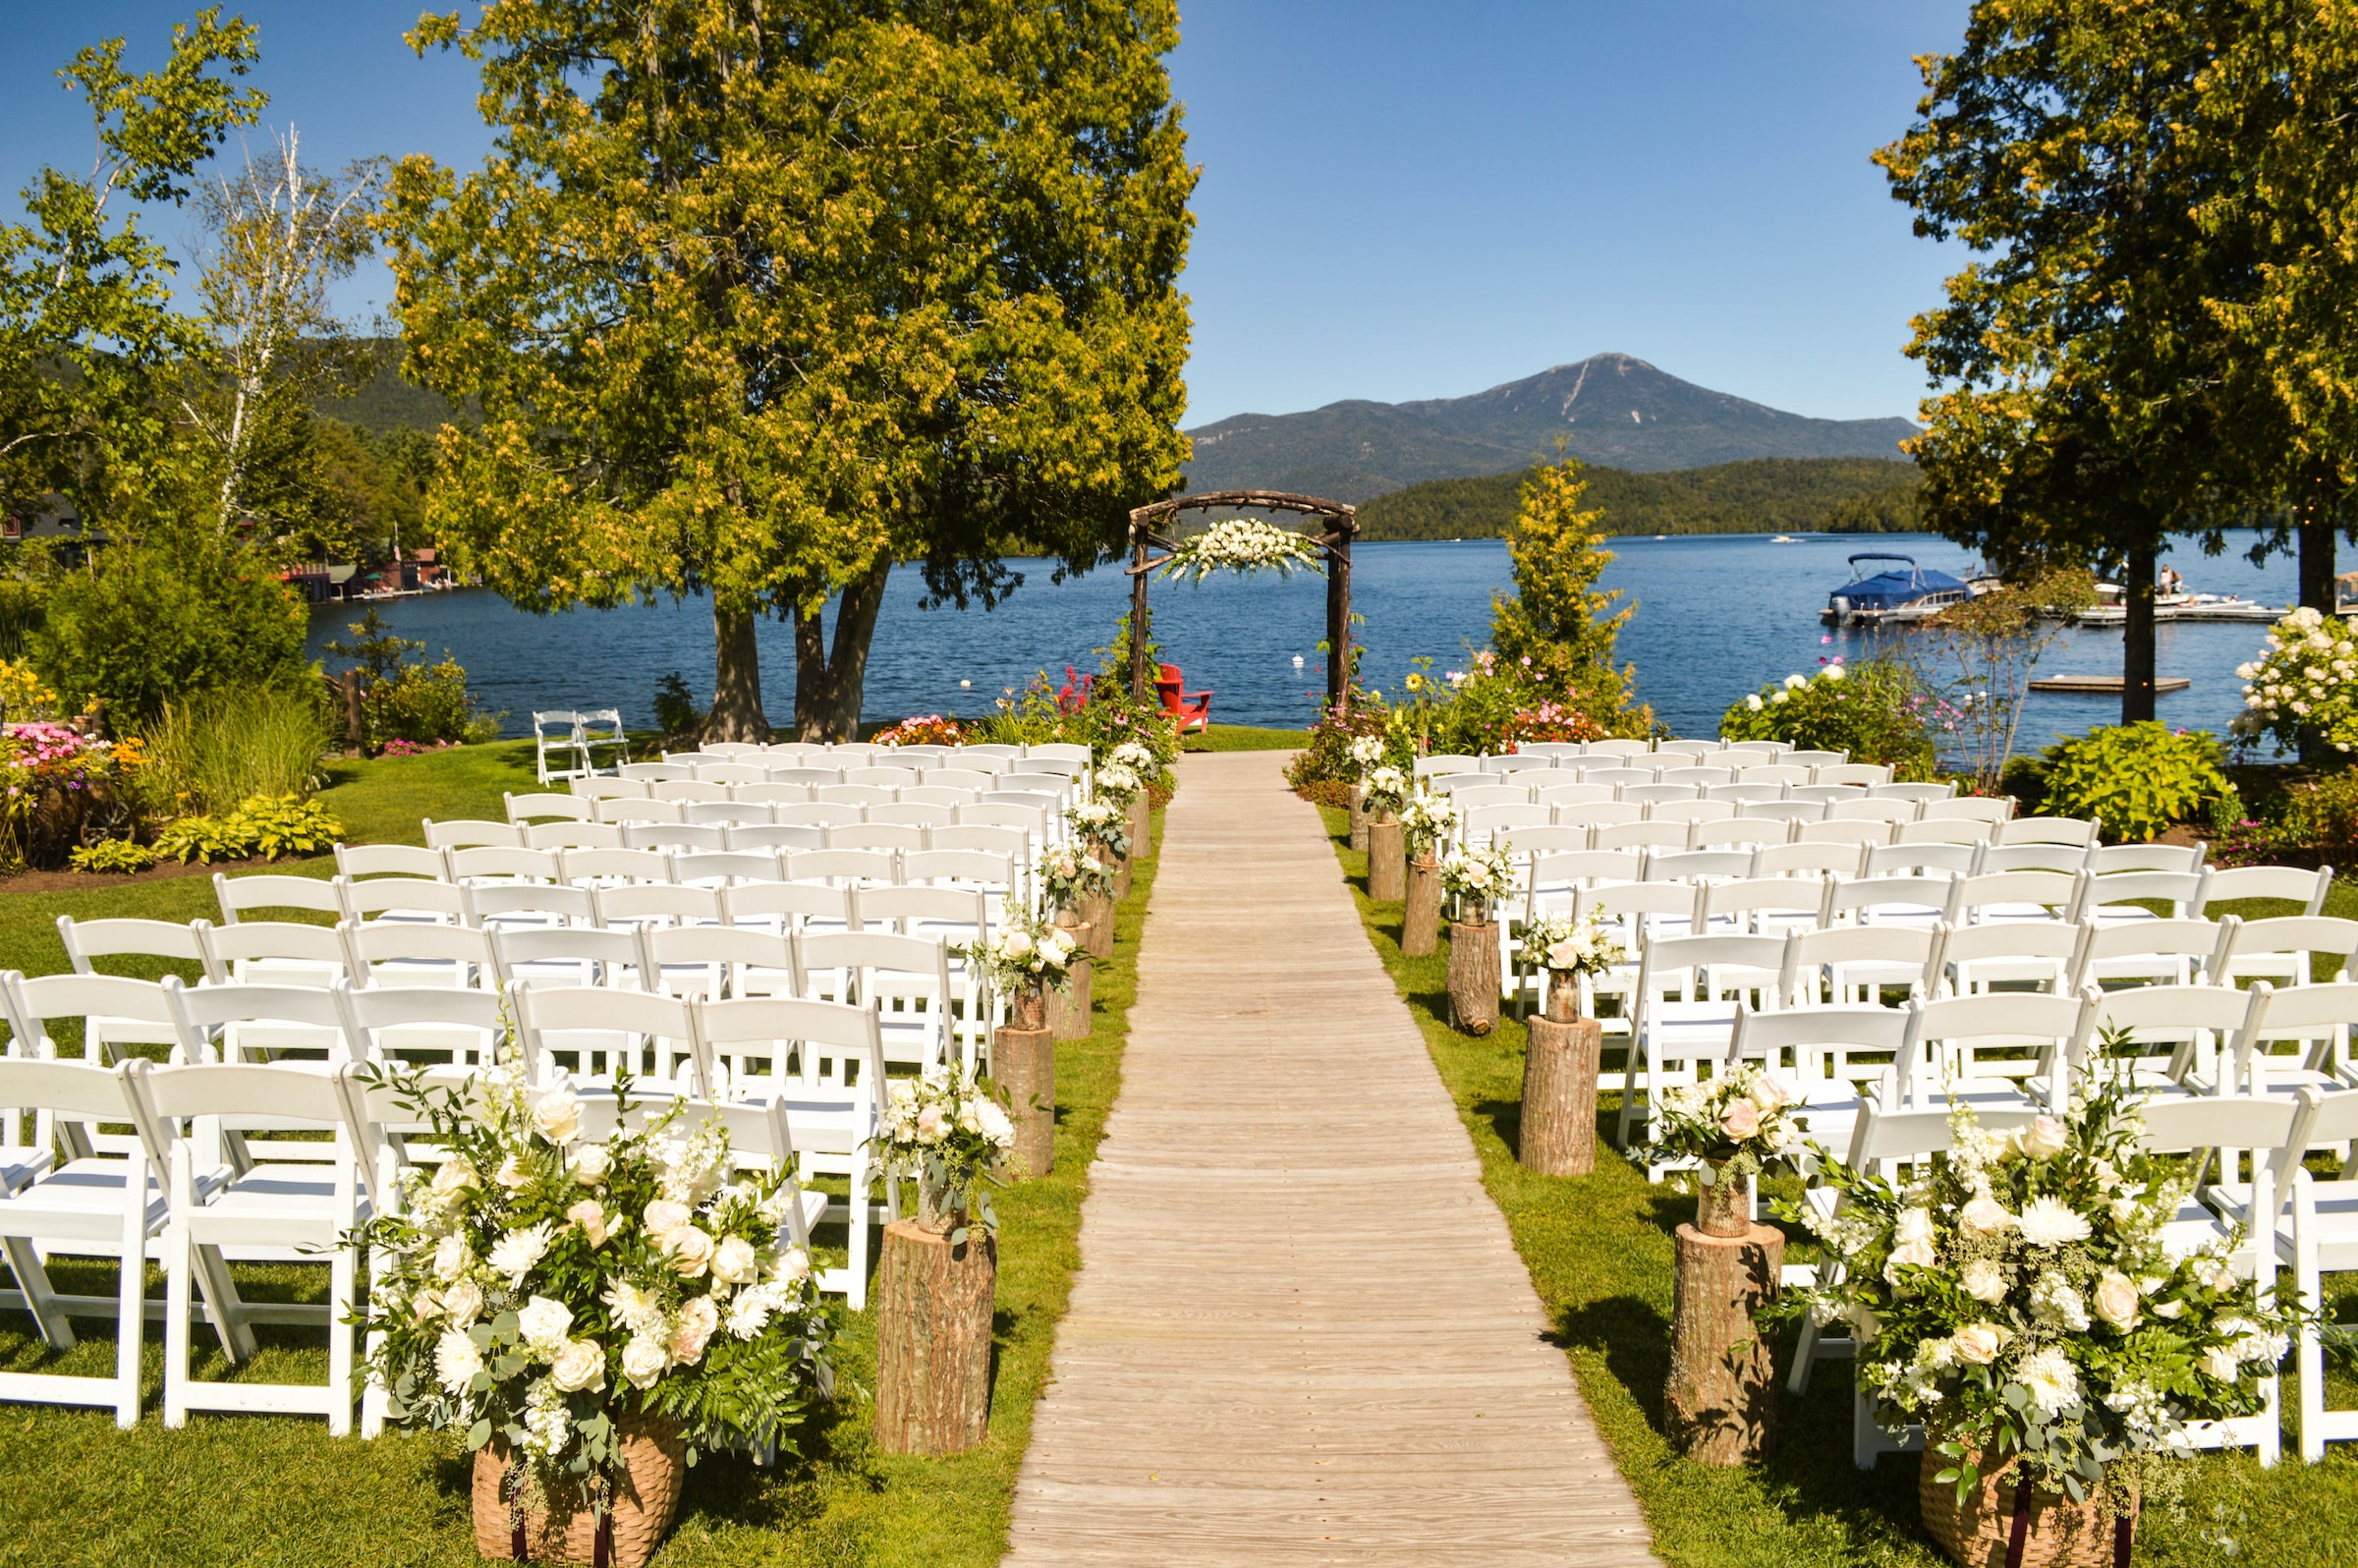 A beautiful outdoor wedding venue | Source: Unsplash